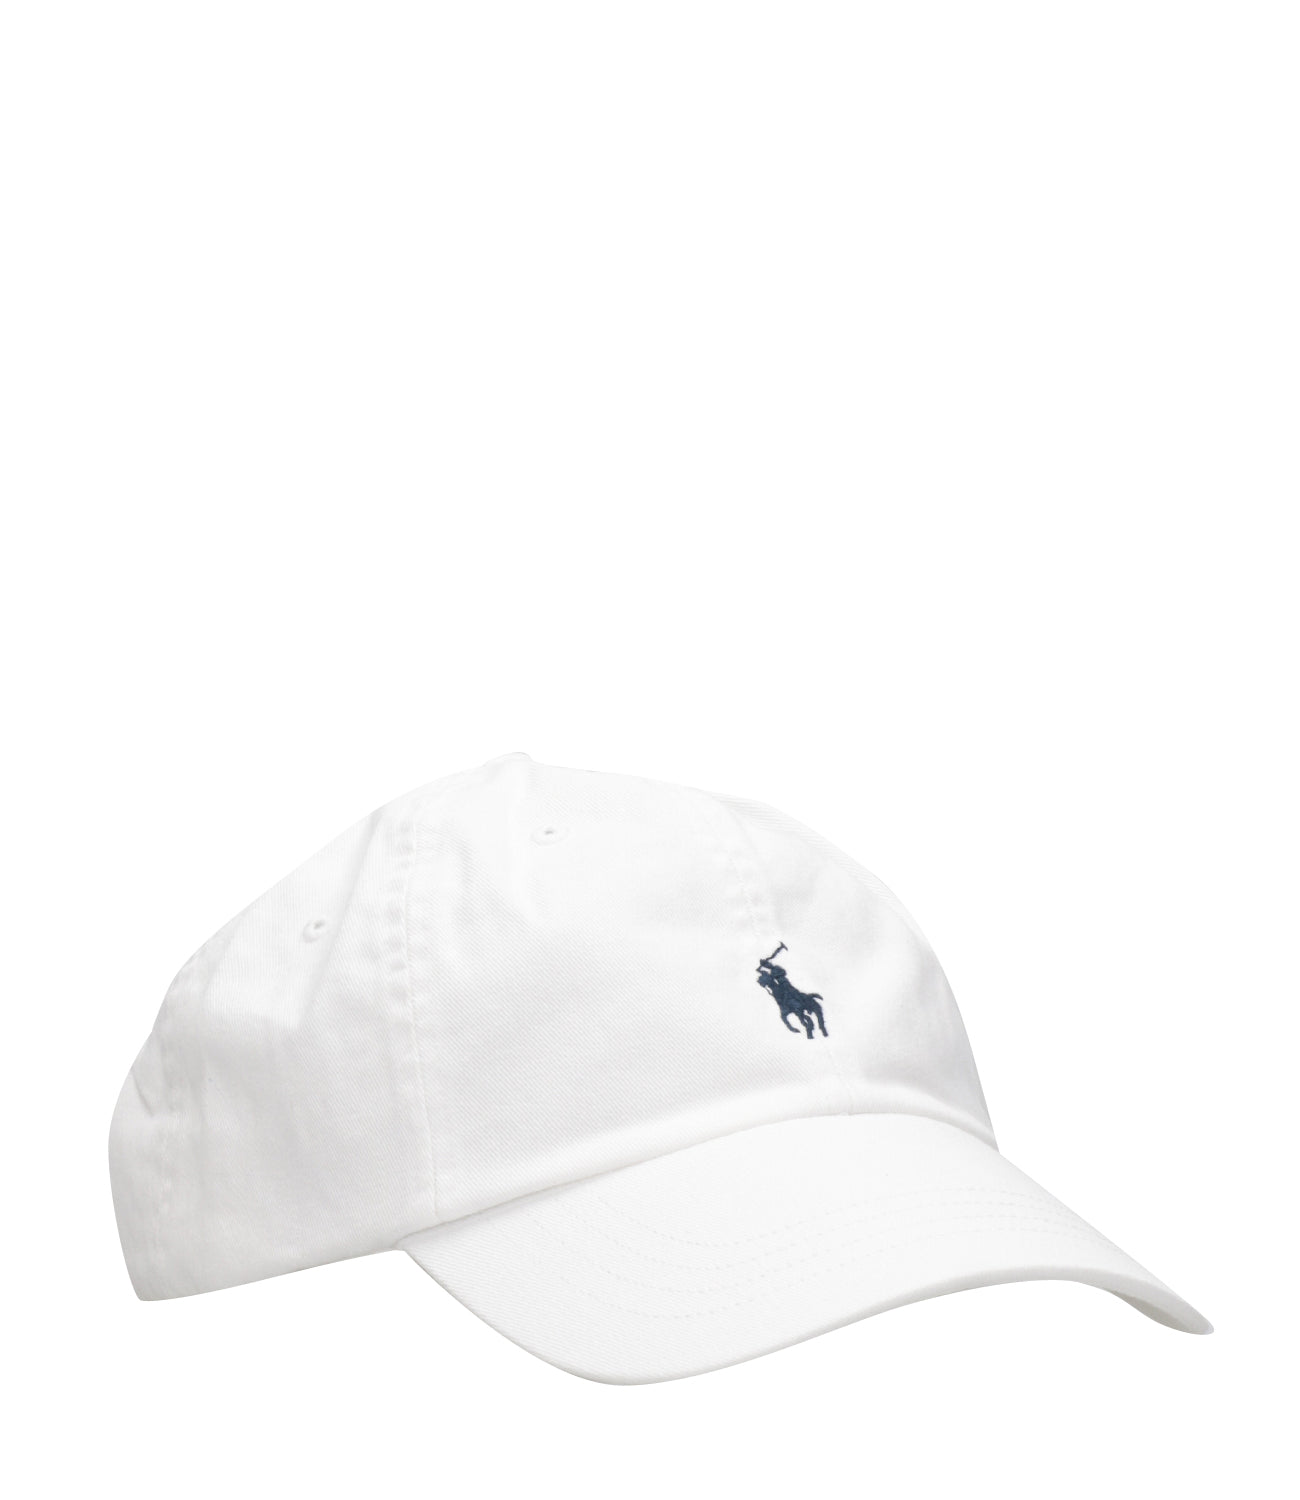 Polo Ralph Lauren | White Hat